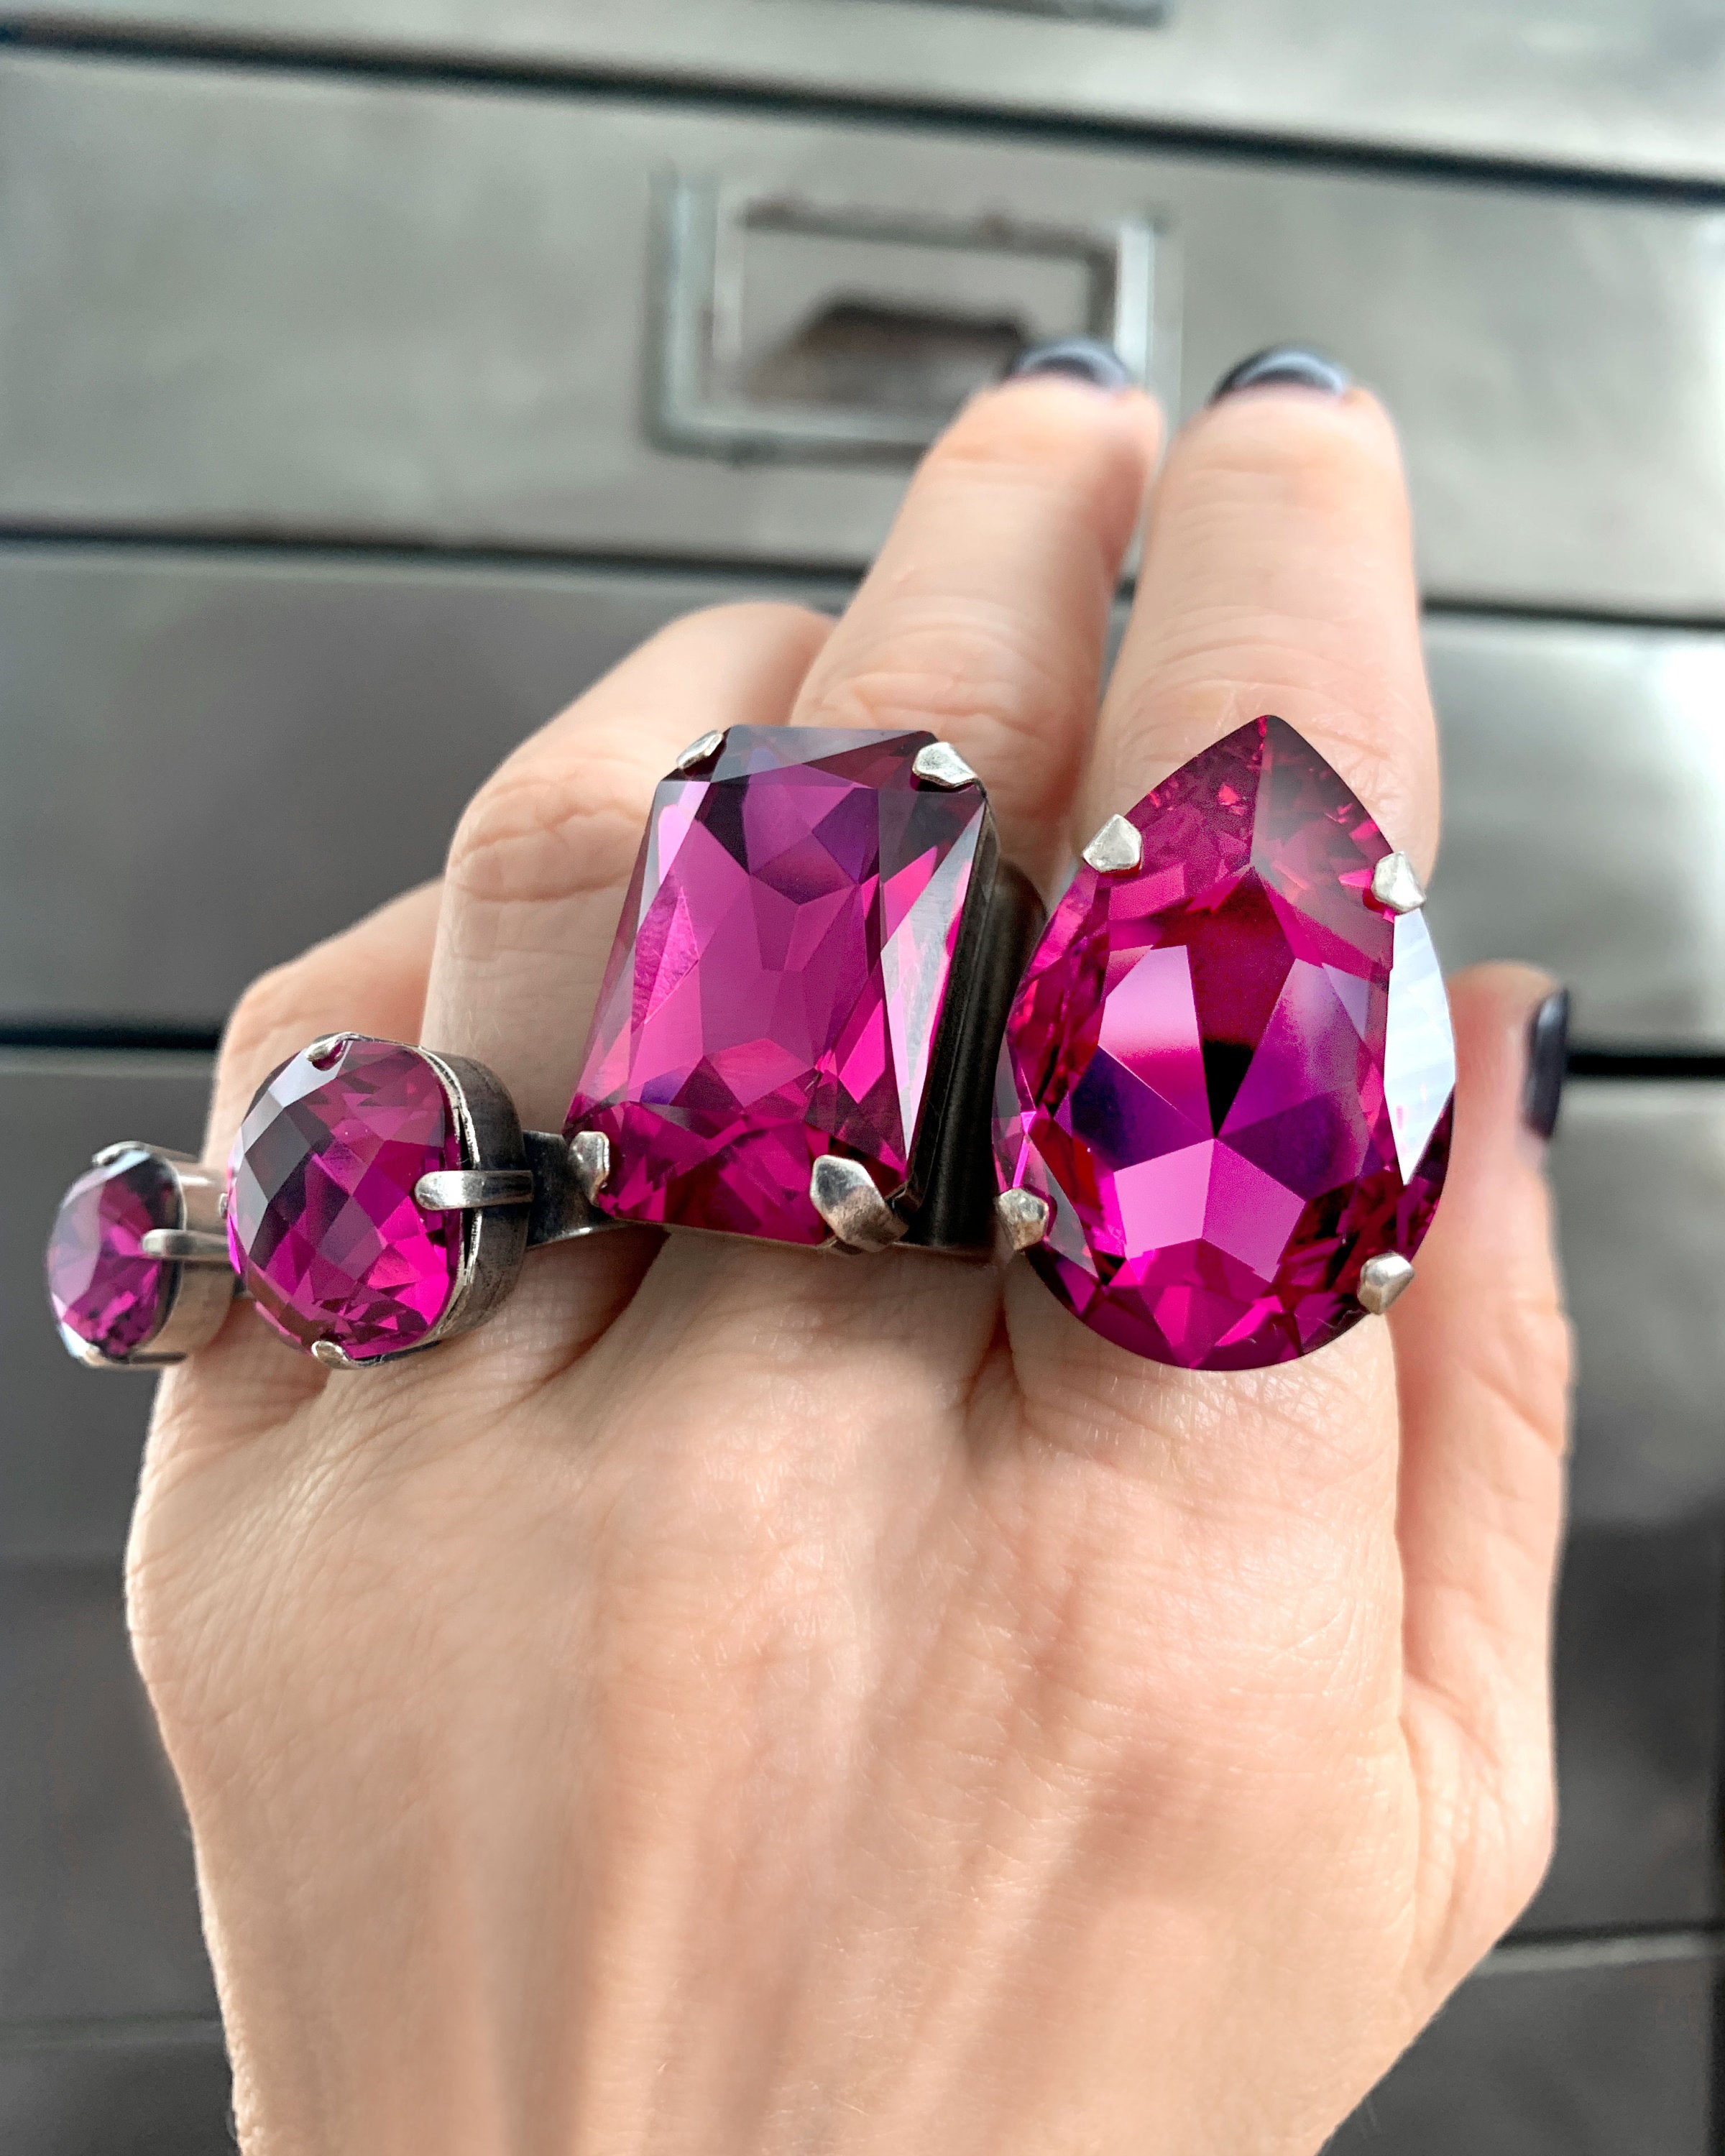 SWEET - Magenta Swarovski Crystal Ring, Fuchsia Cushion Cut Crystal, Antique Silver Adjustable Ring Band - Hot Pink Crystal Ring - Swar 4470